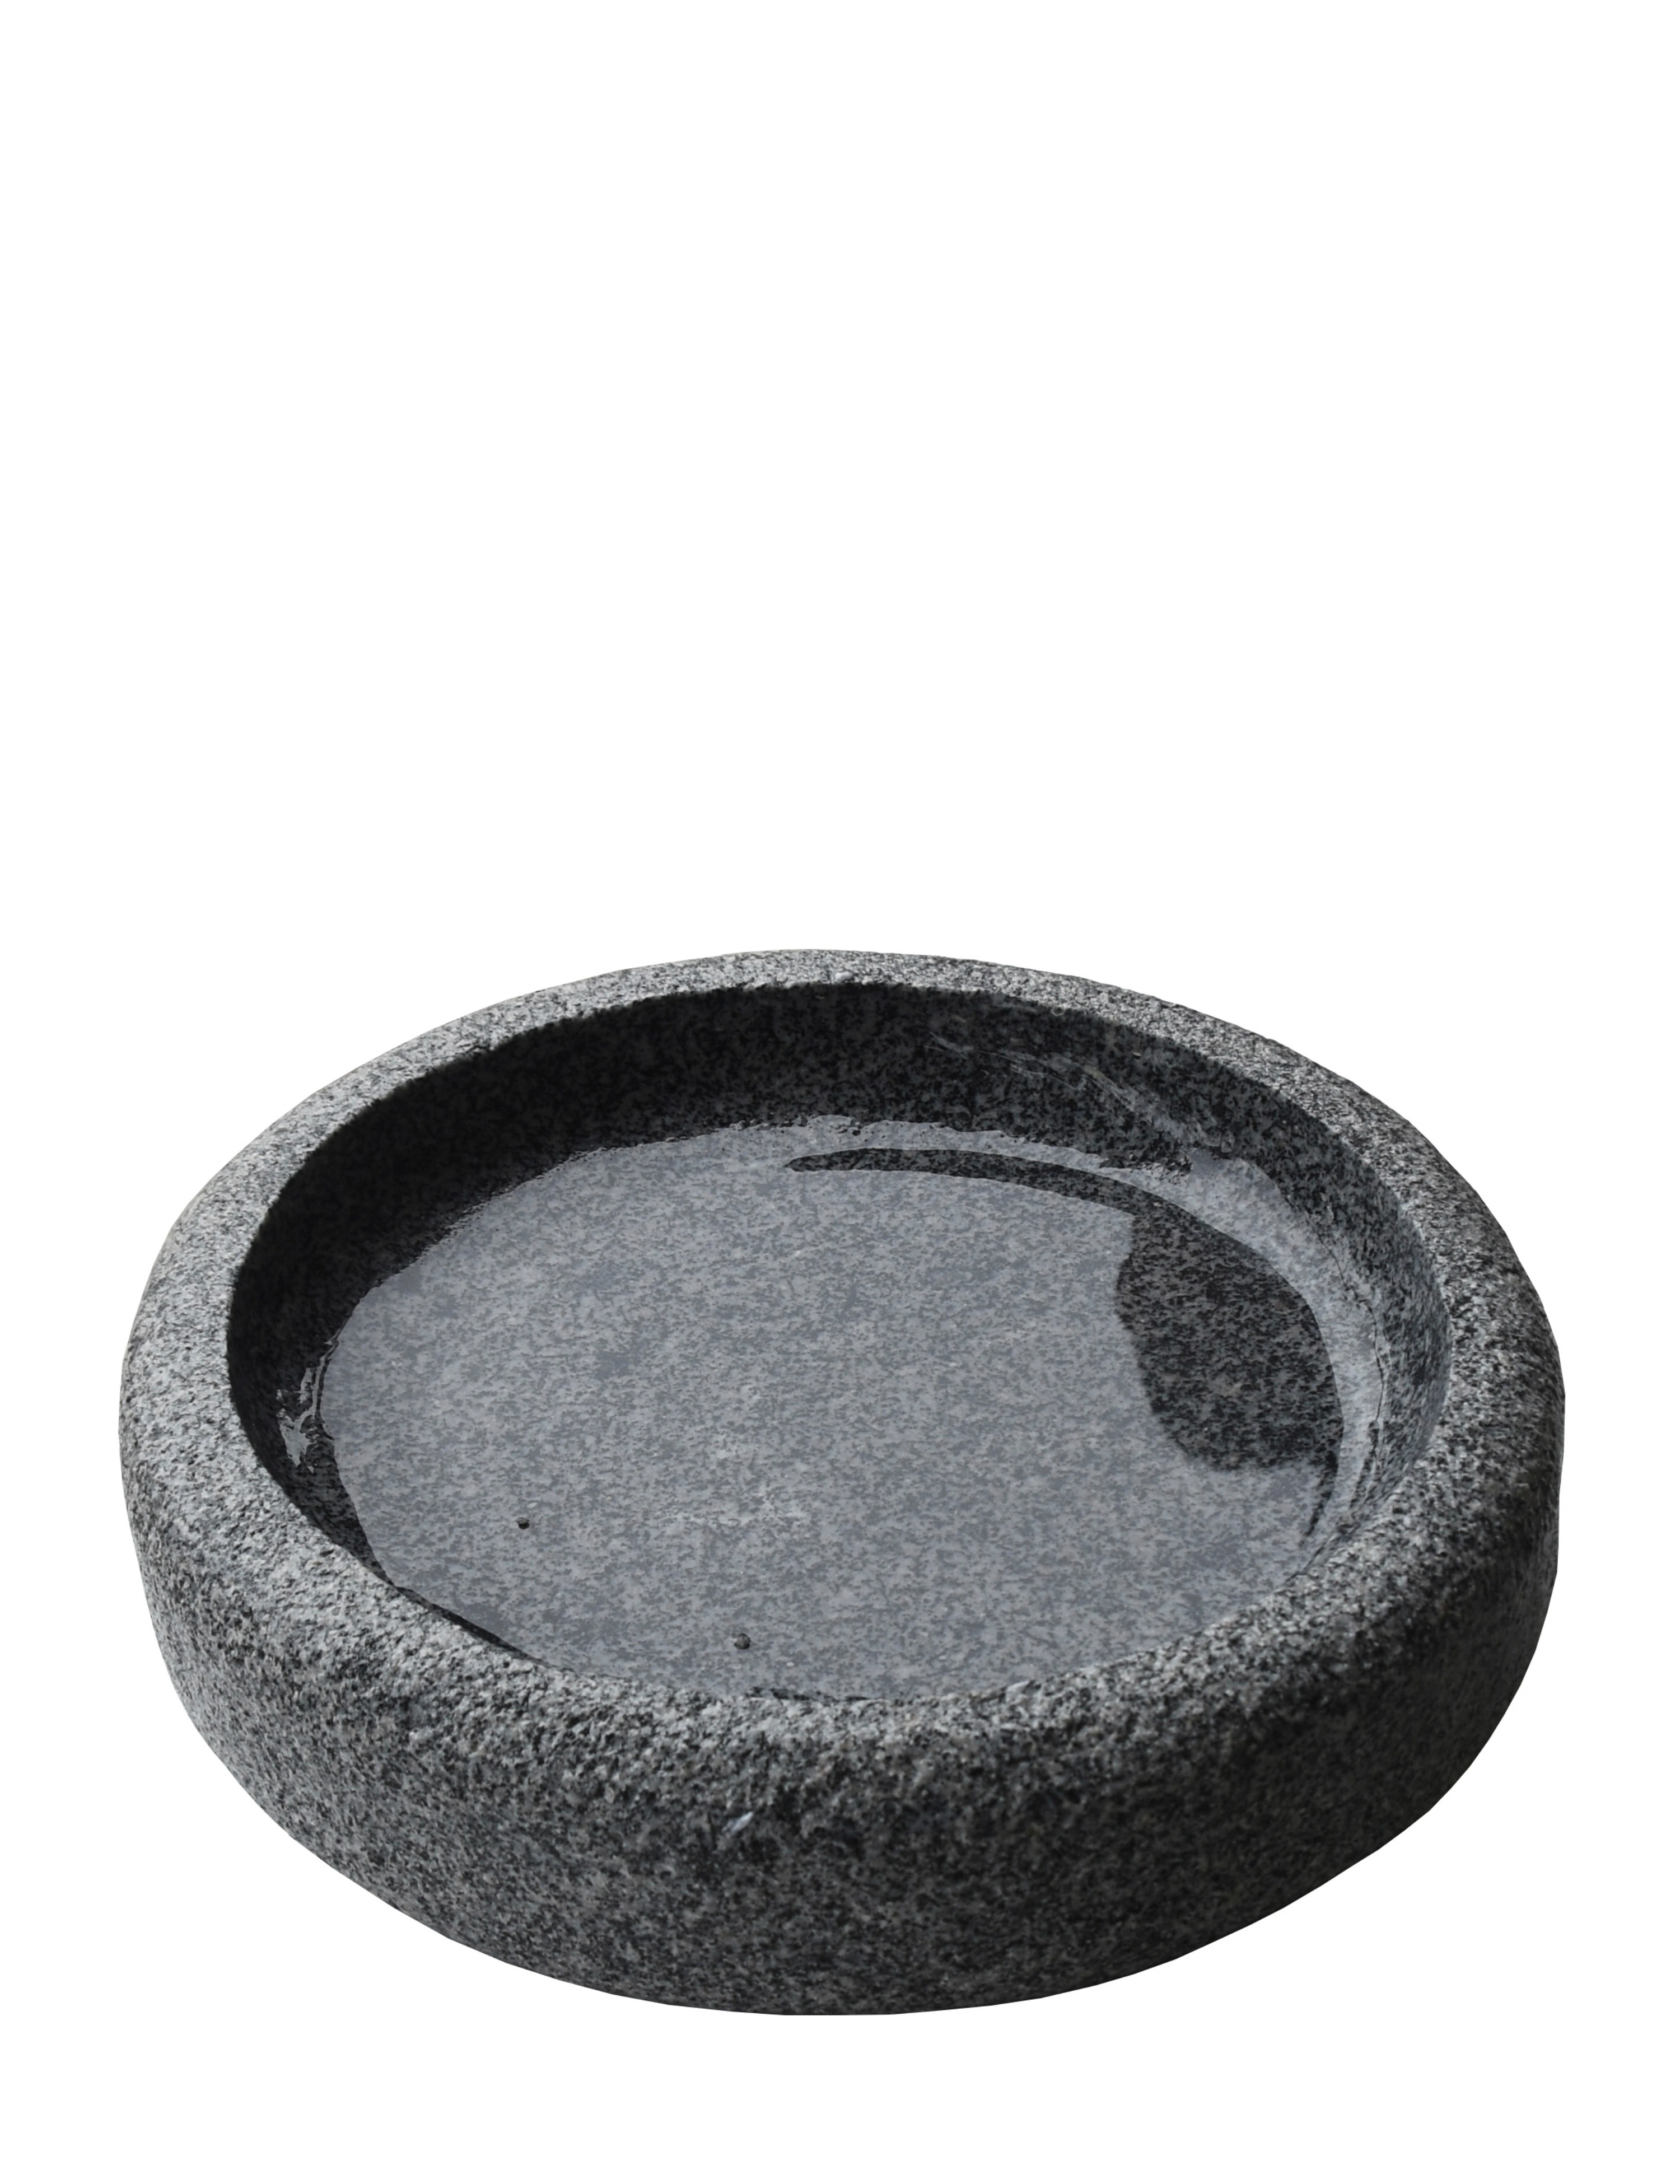 Granitfuglebad mørkegrå, rund cm, blankpoleret